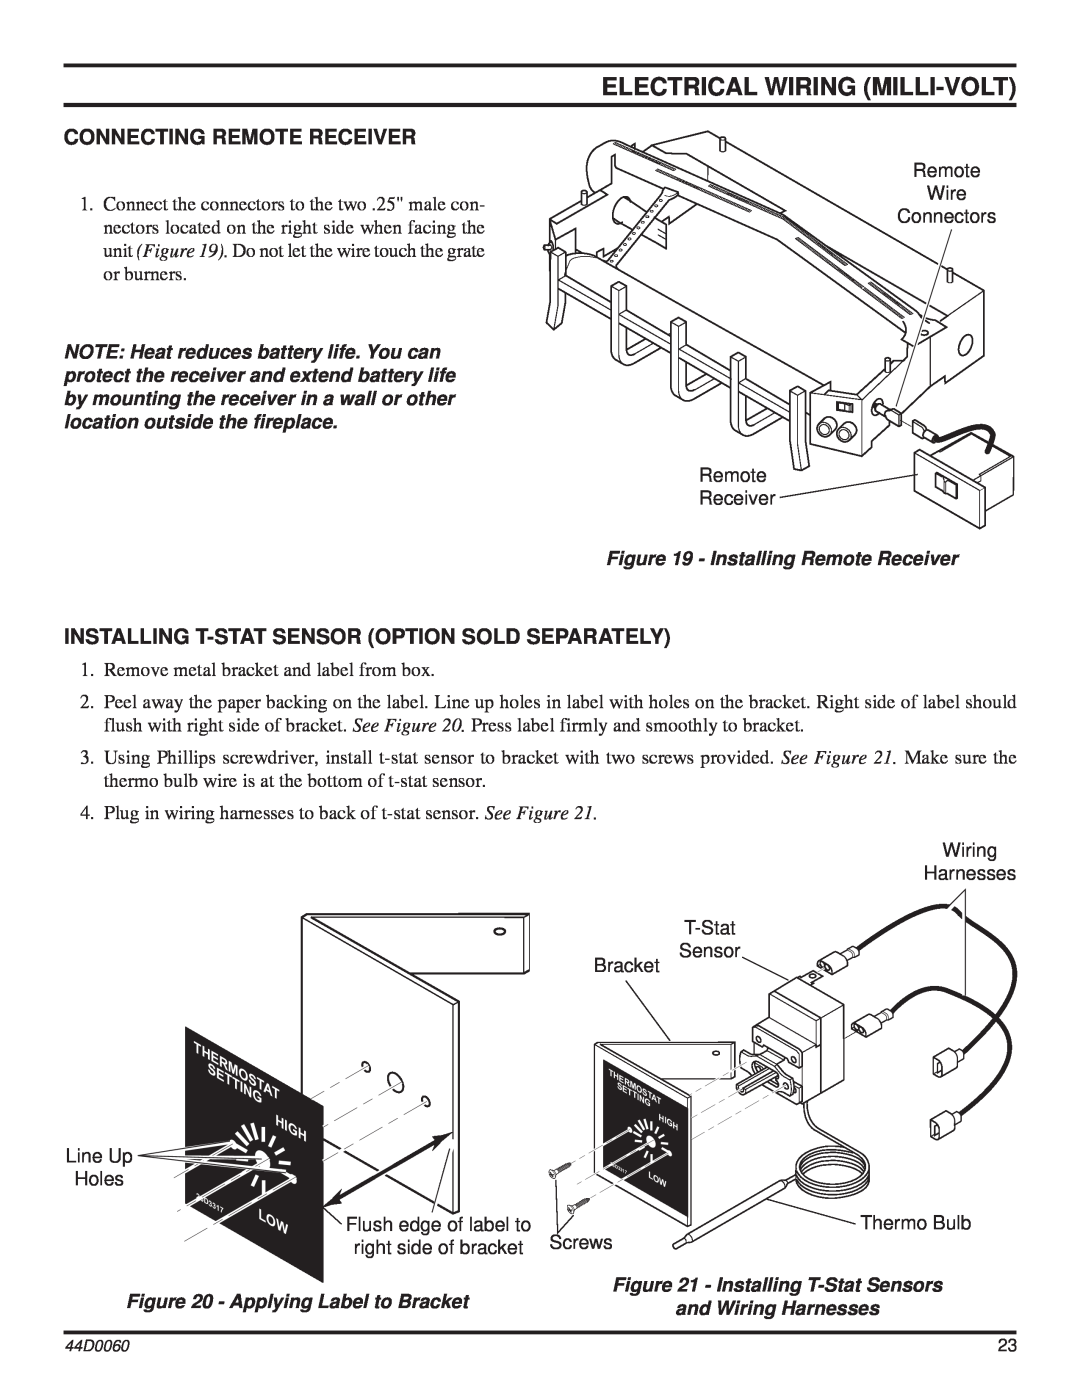 Monessen Hearth DEB30, DEB20 manual Electrical Wiring Milli-Volt, Connecting Remote Receiver, Settin 